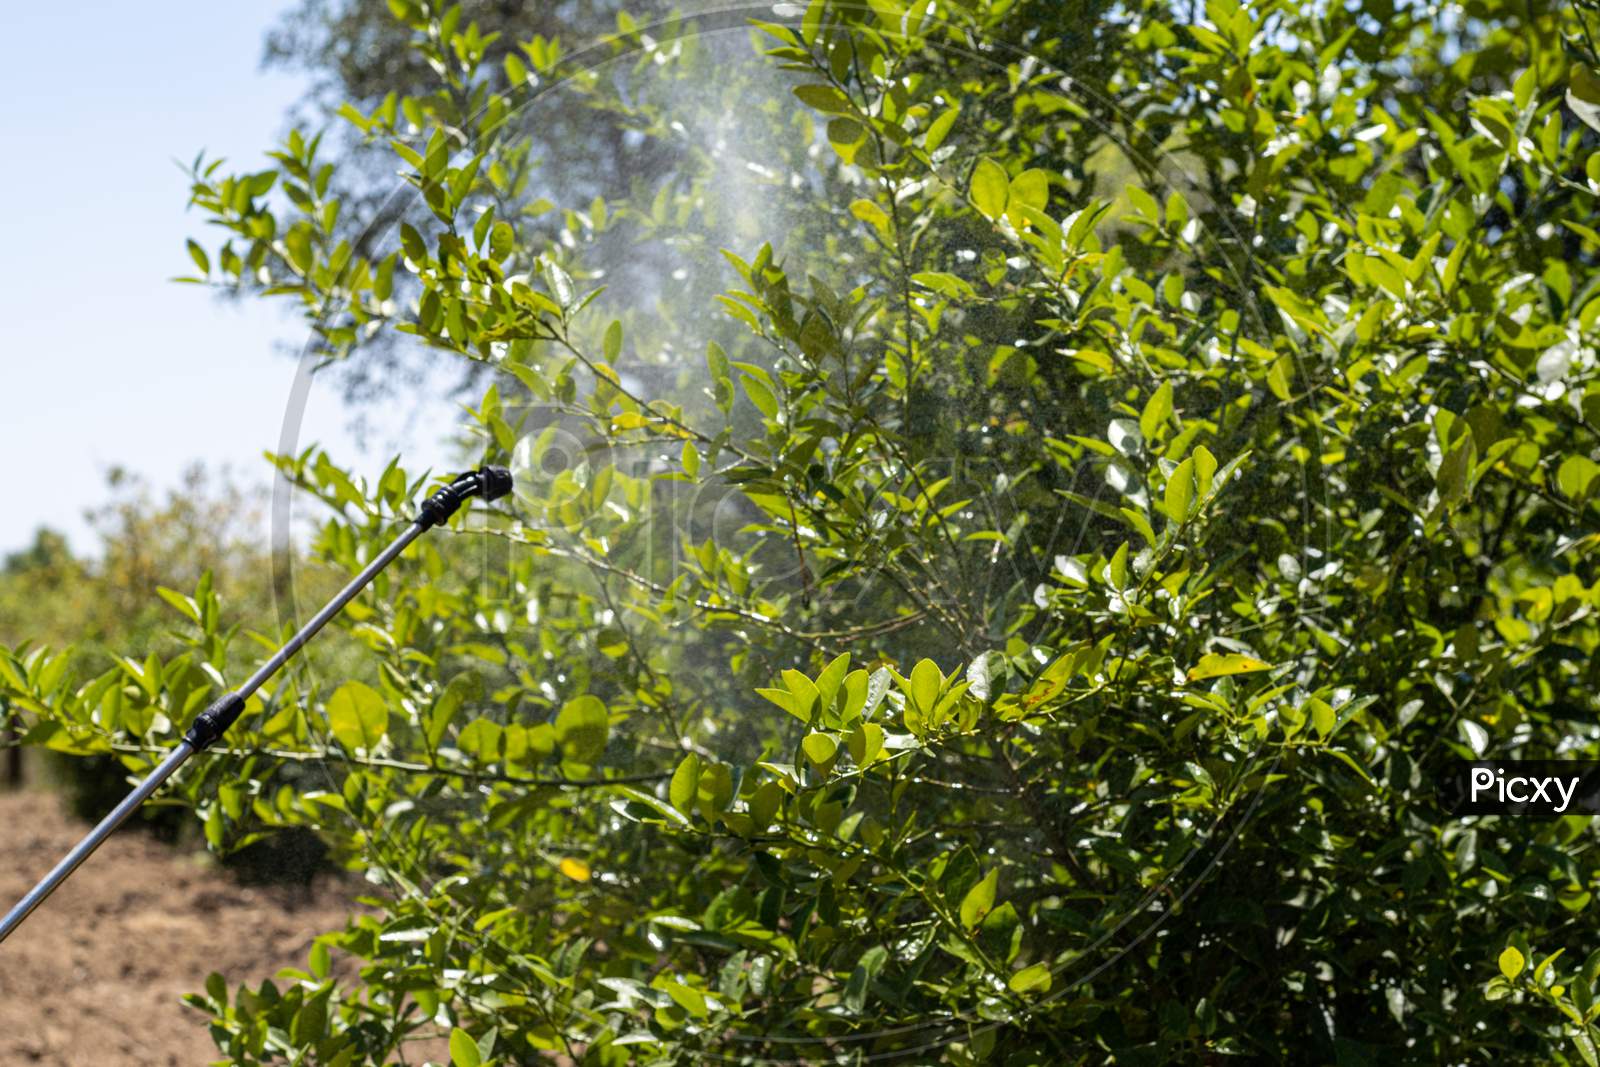 A farmer spraying pesticides using sprayer machine on lemon trees